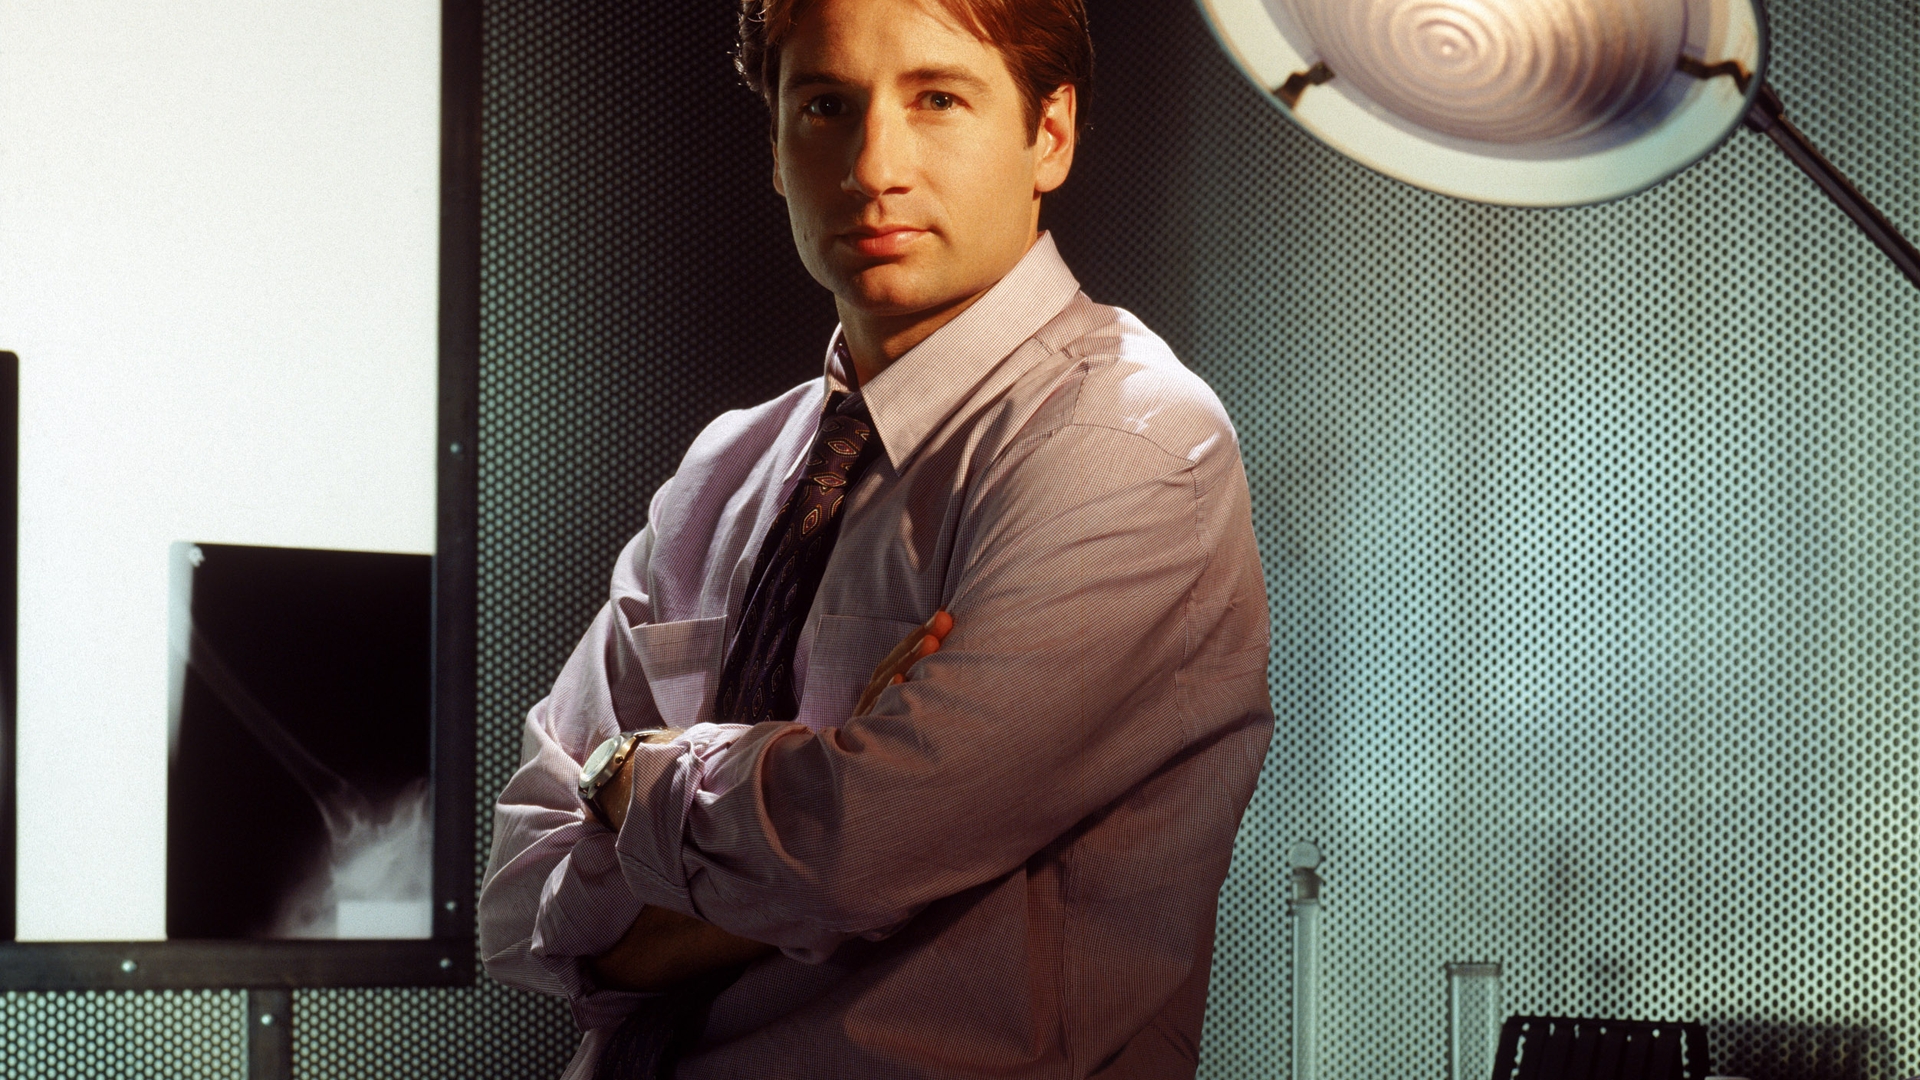 David Duchovny, Fox Mulder, The X-Files - desktop wallpaper